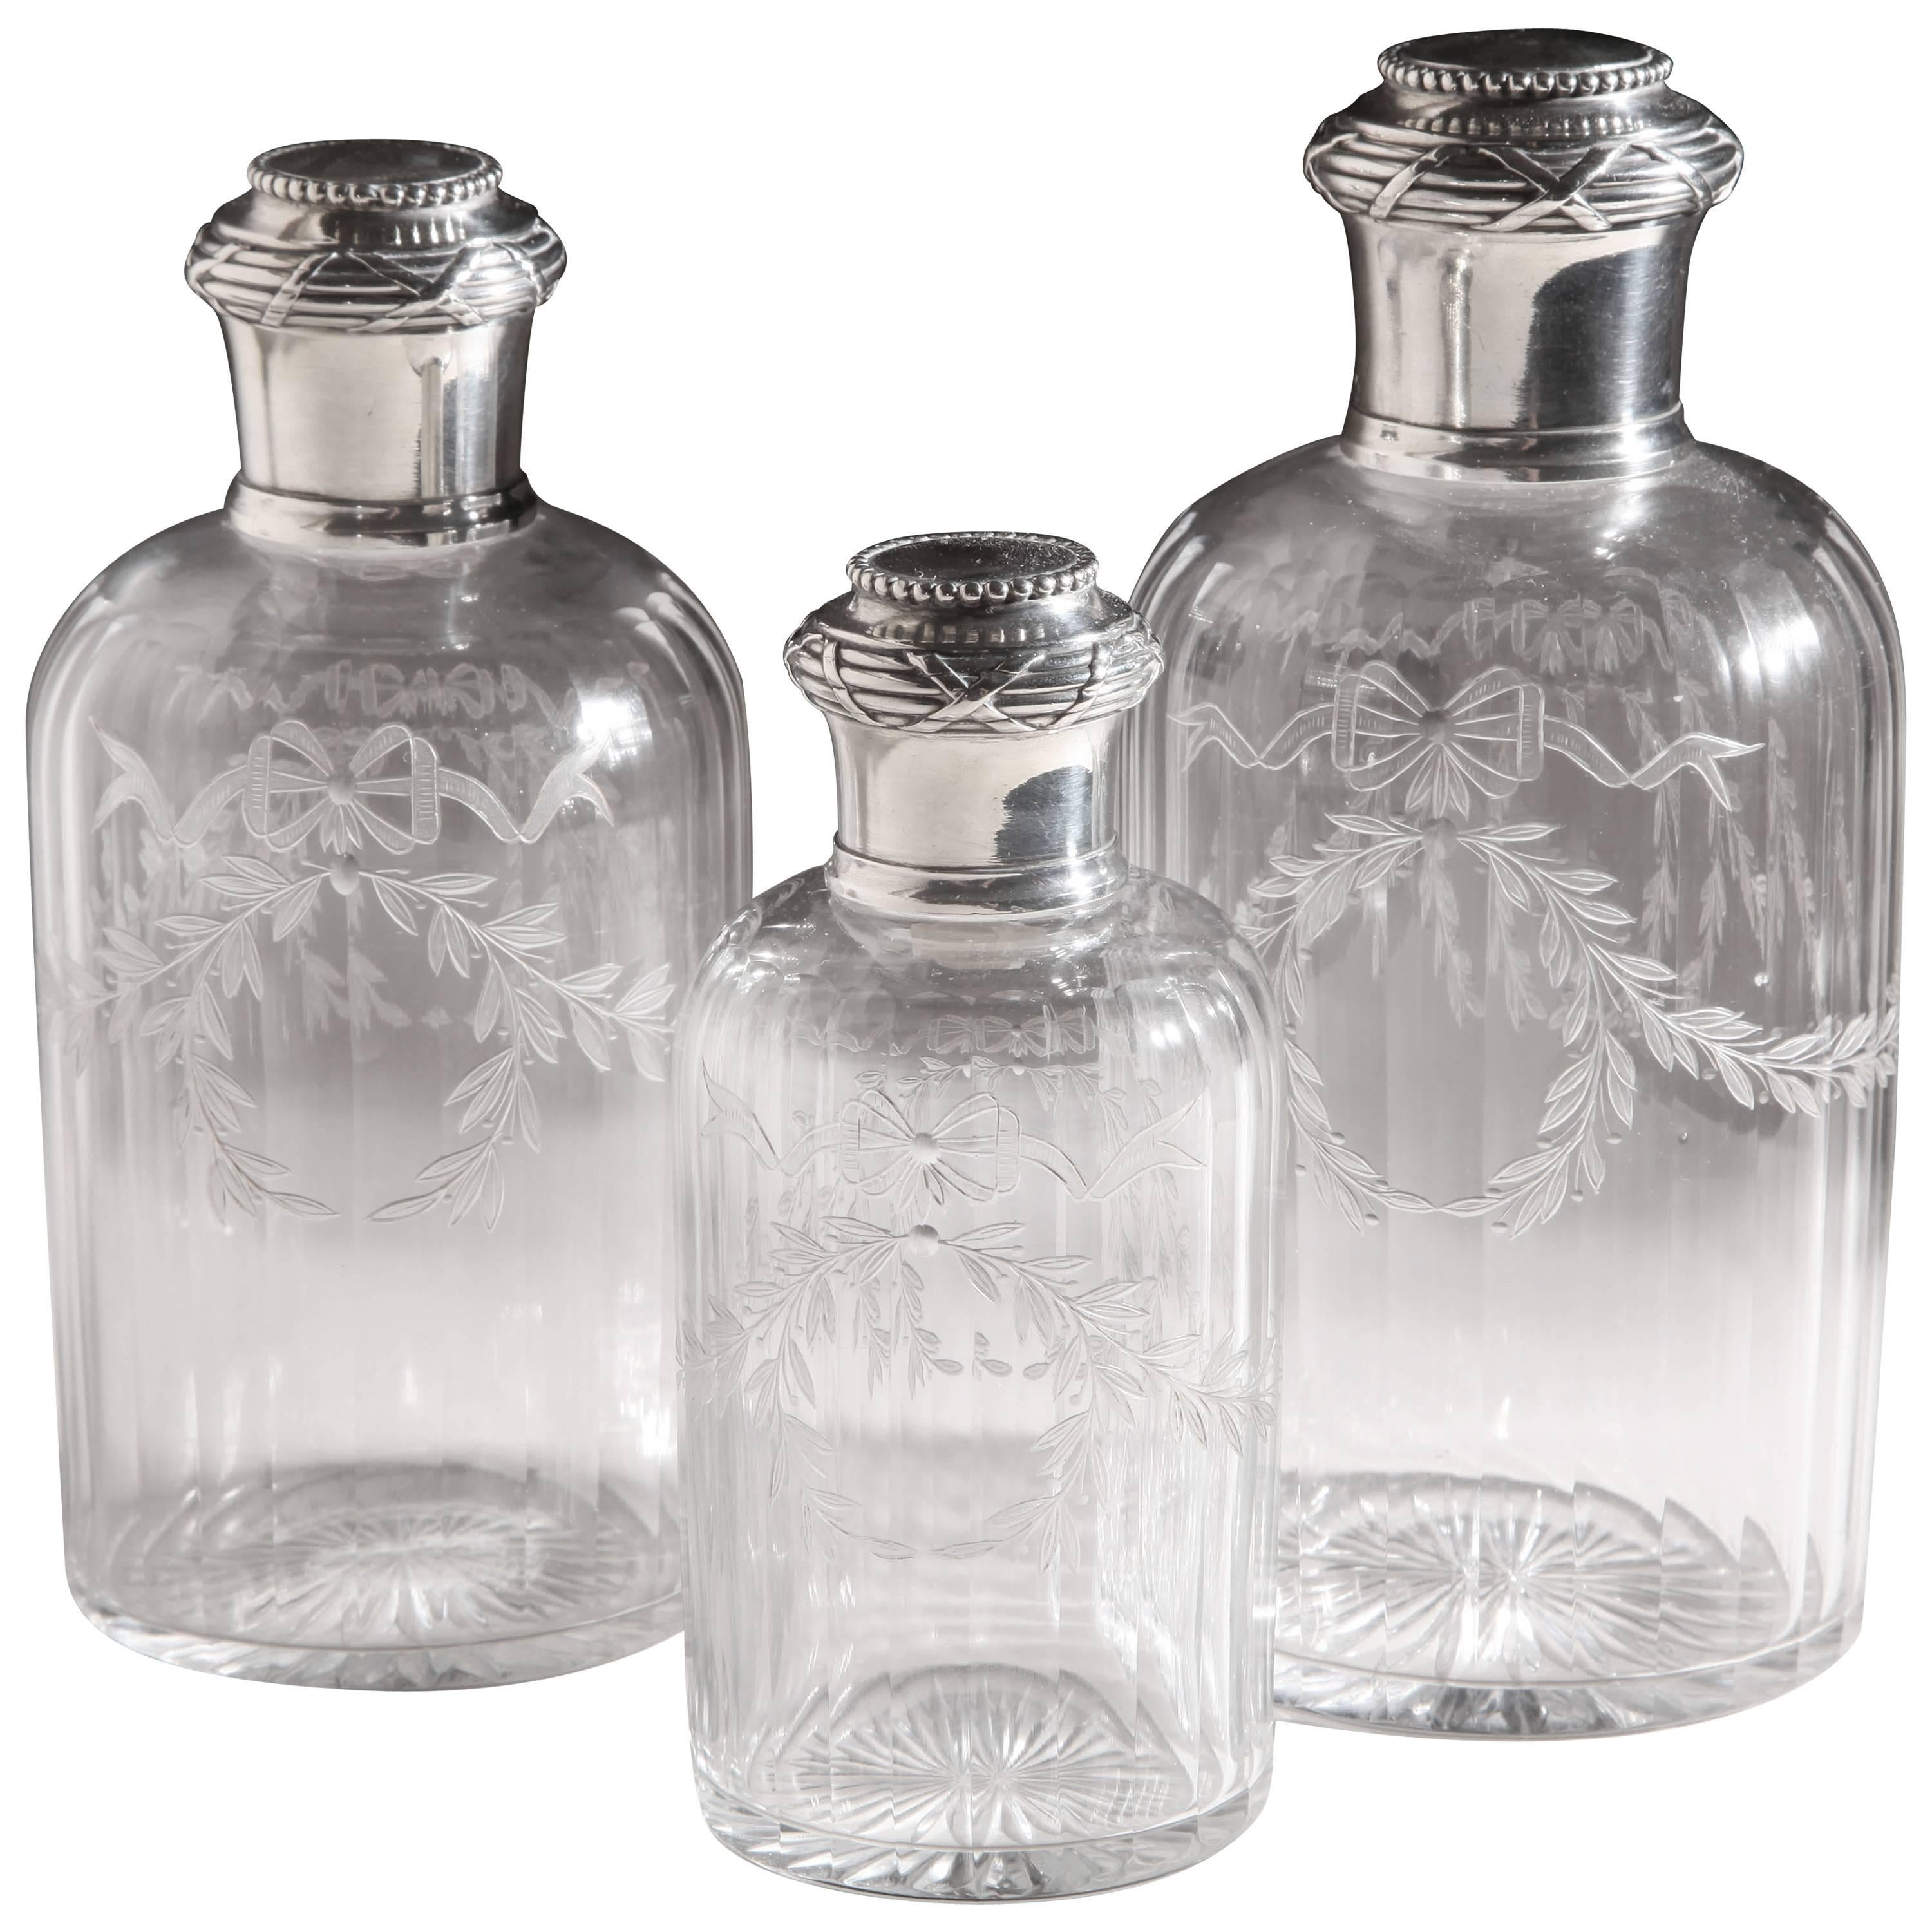 Boin Taburet French Art Deco Set of 3 Sterling Silver & Glass Scent Bottles For Sale